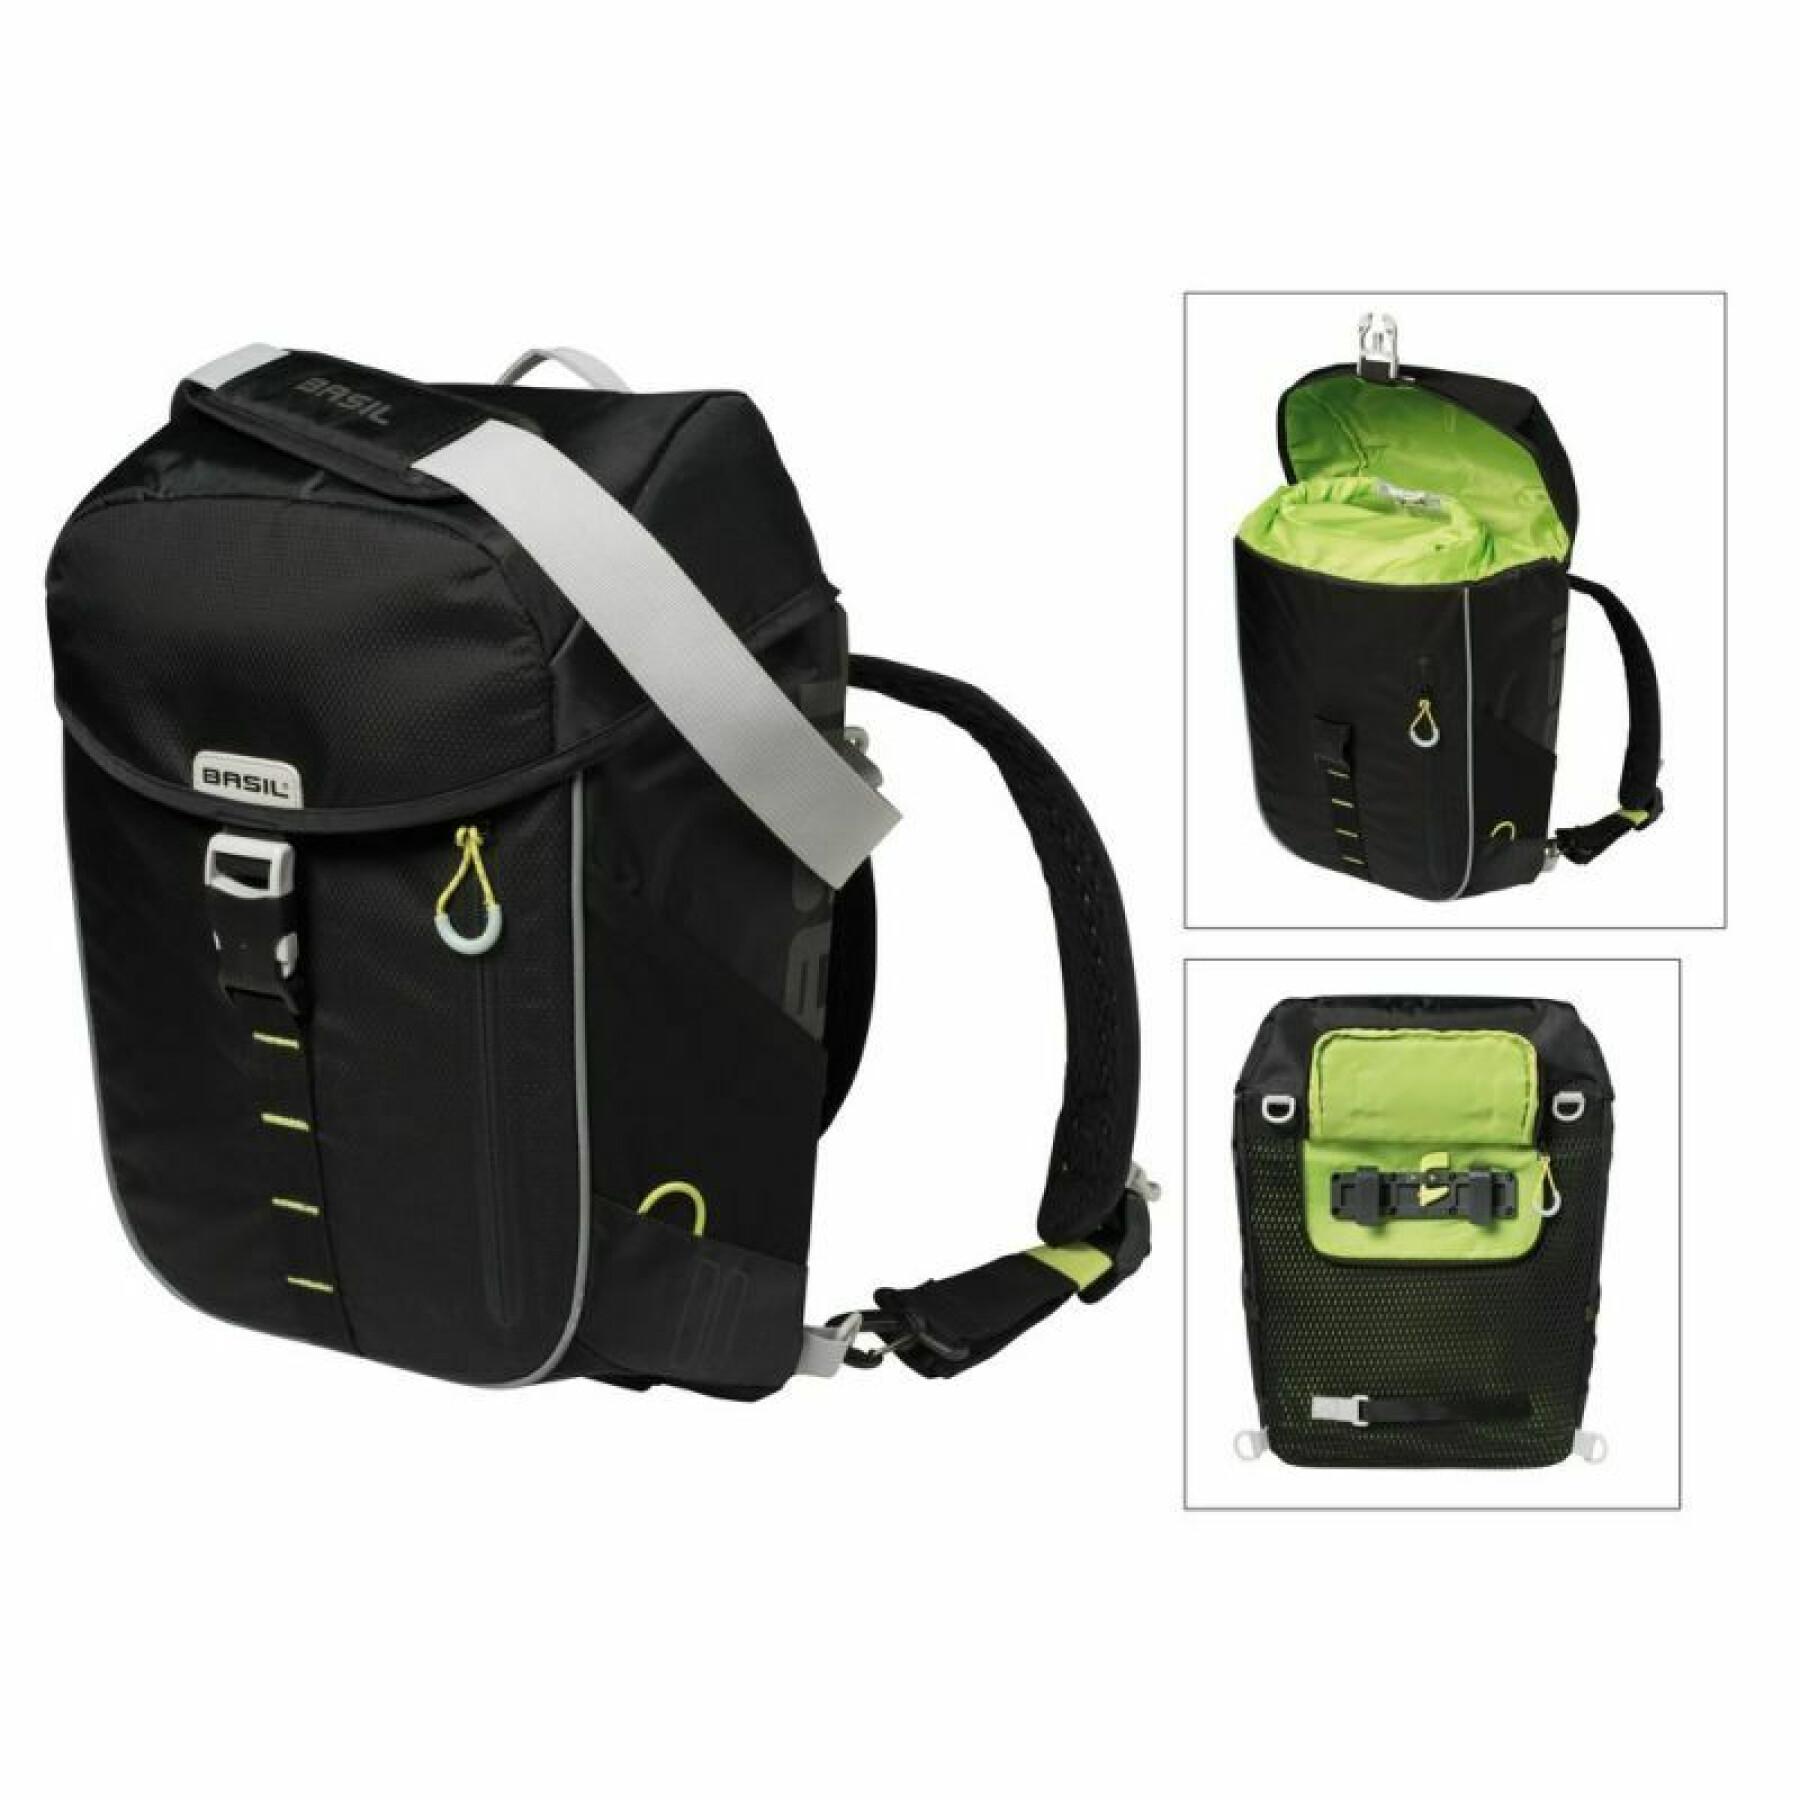 Waterproof backpack and shoulder strap Basil miles daypack 17L